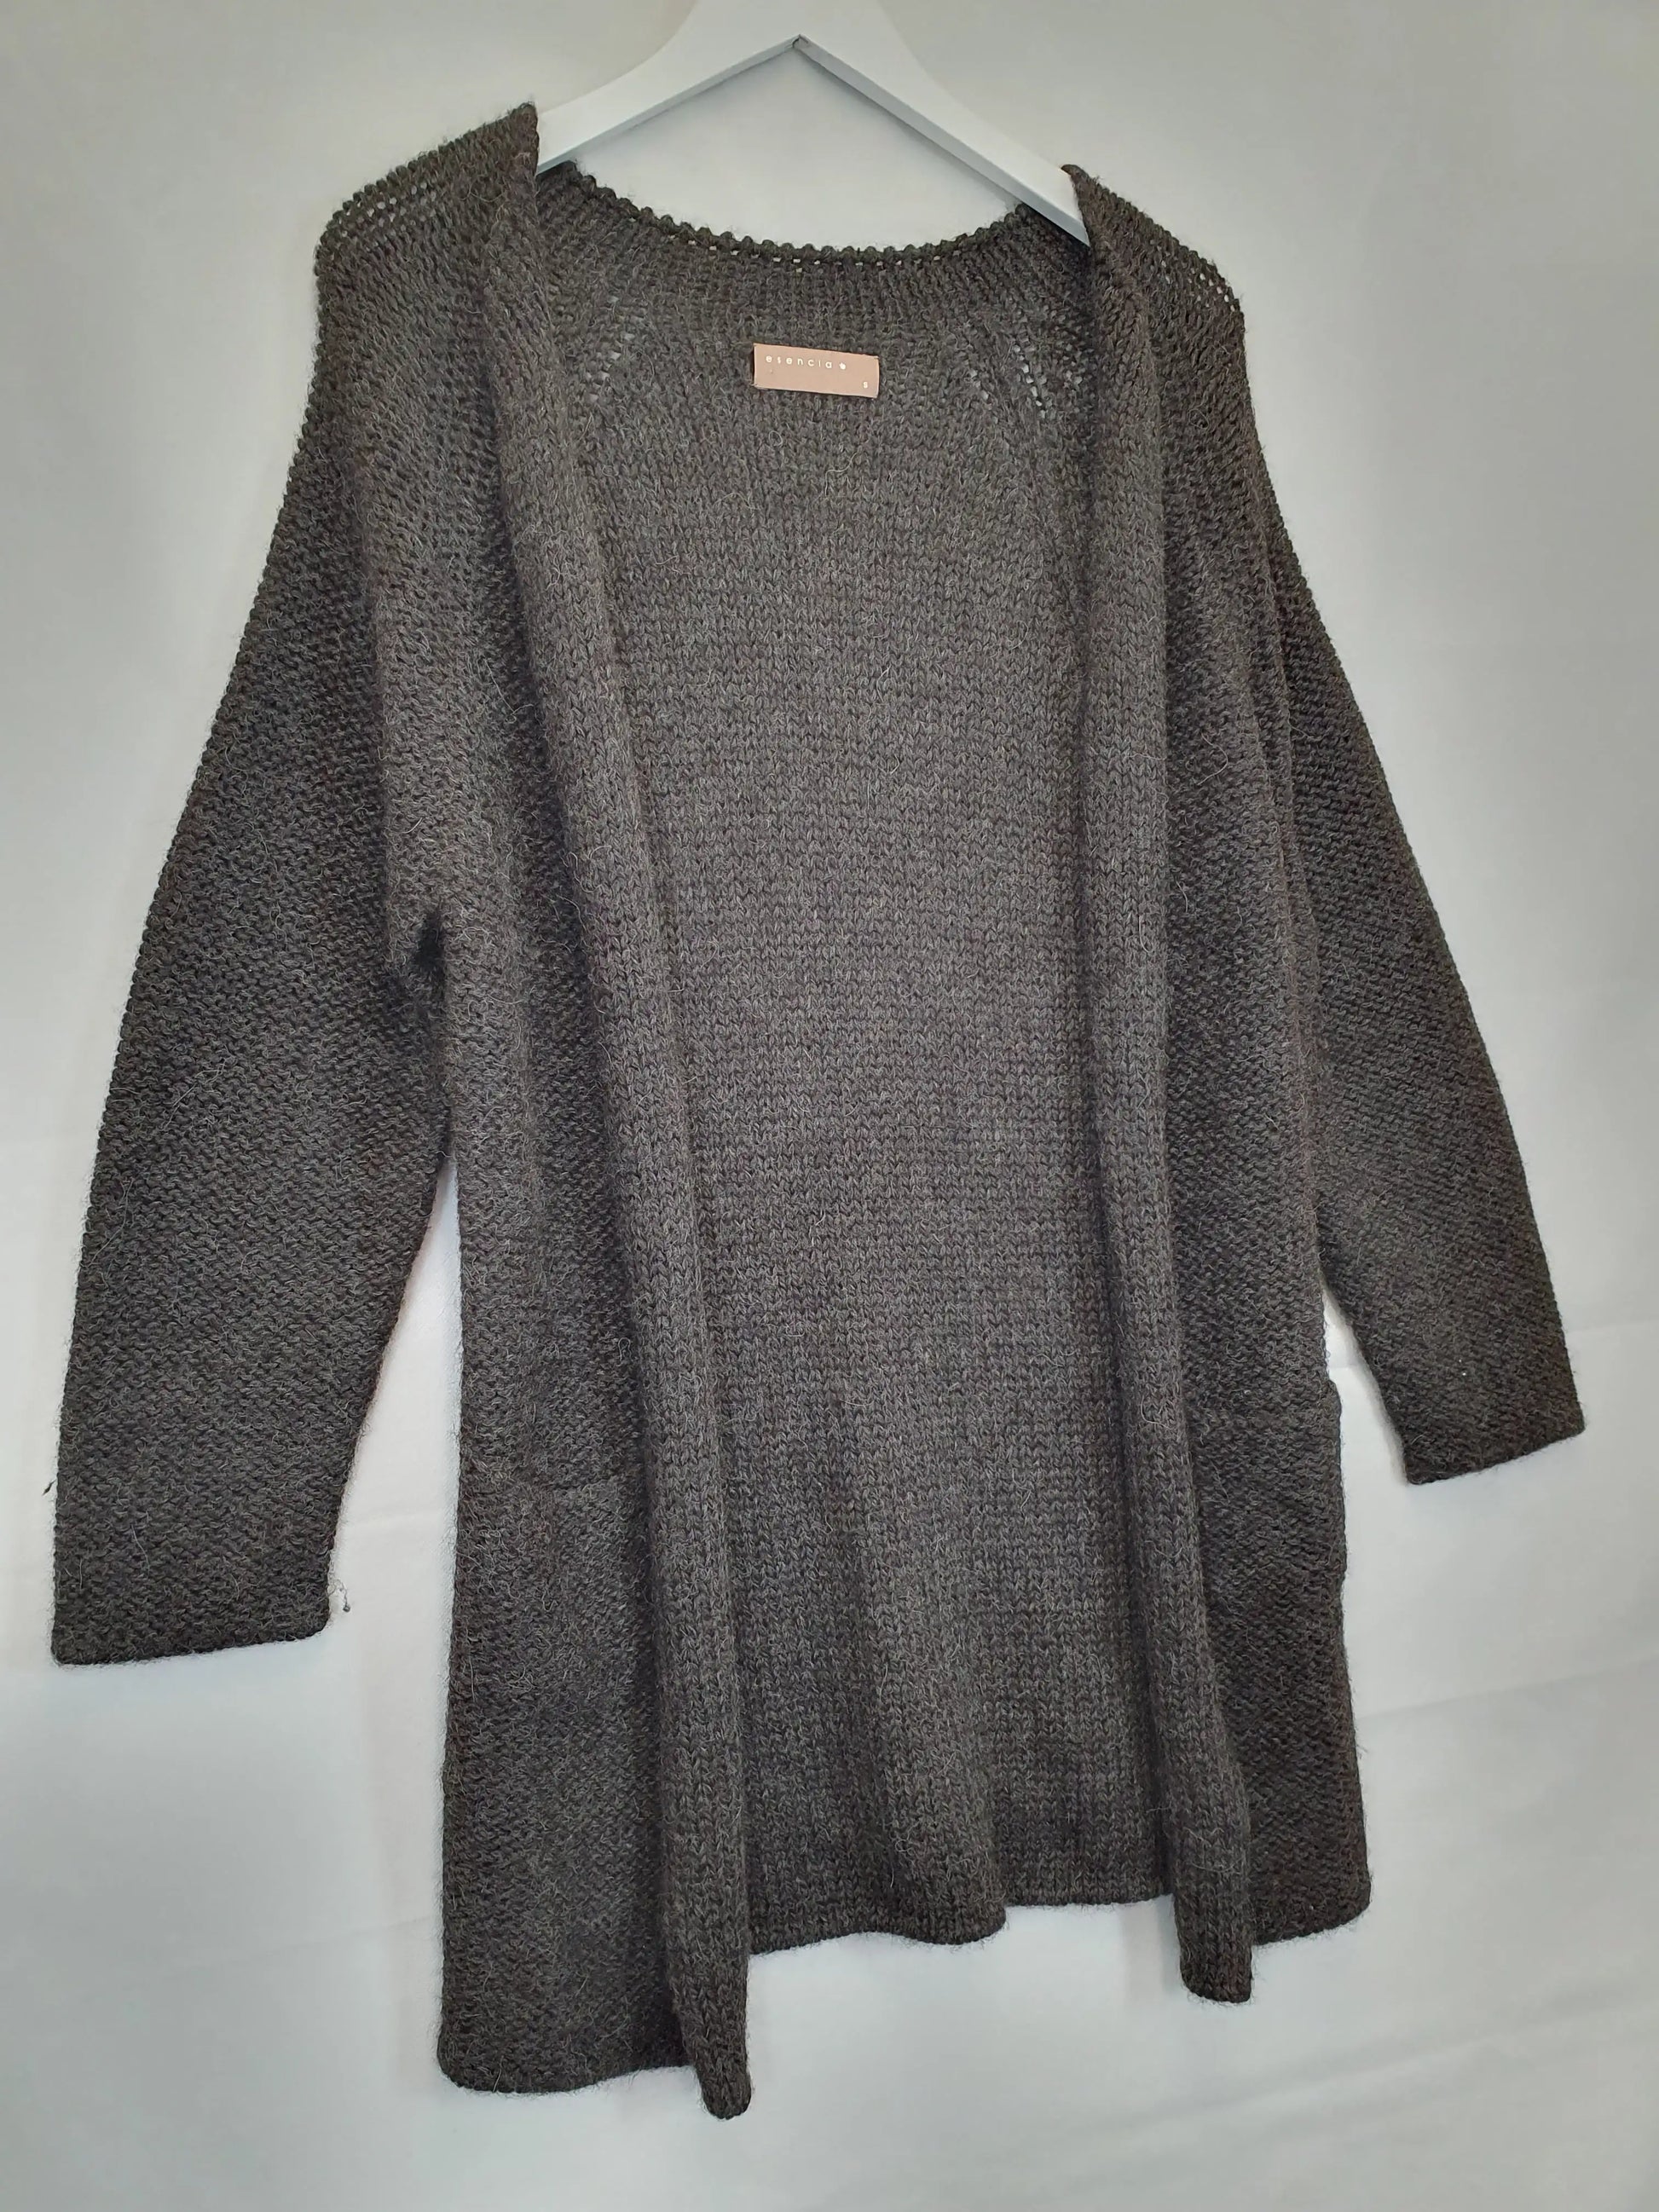 Esencia Winter Warmer Alpaca Cardigan Size S by SwapUp-Online Second Hand Store-Online Thrift Store